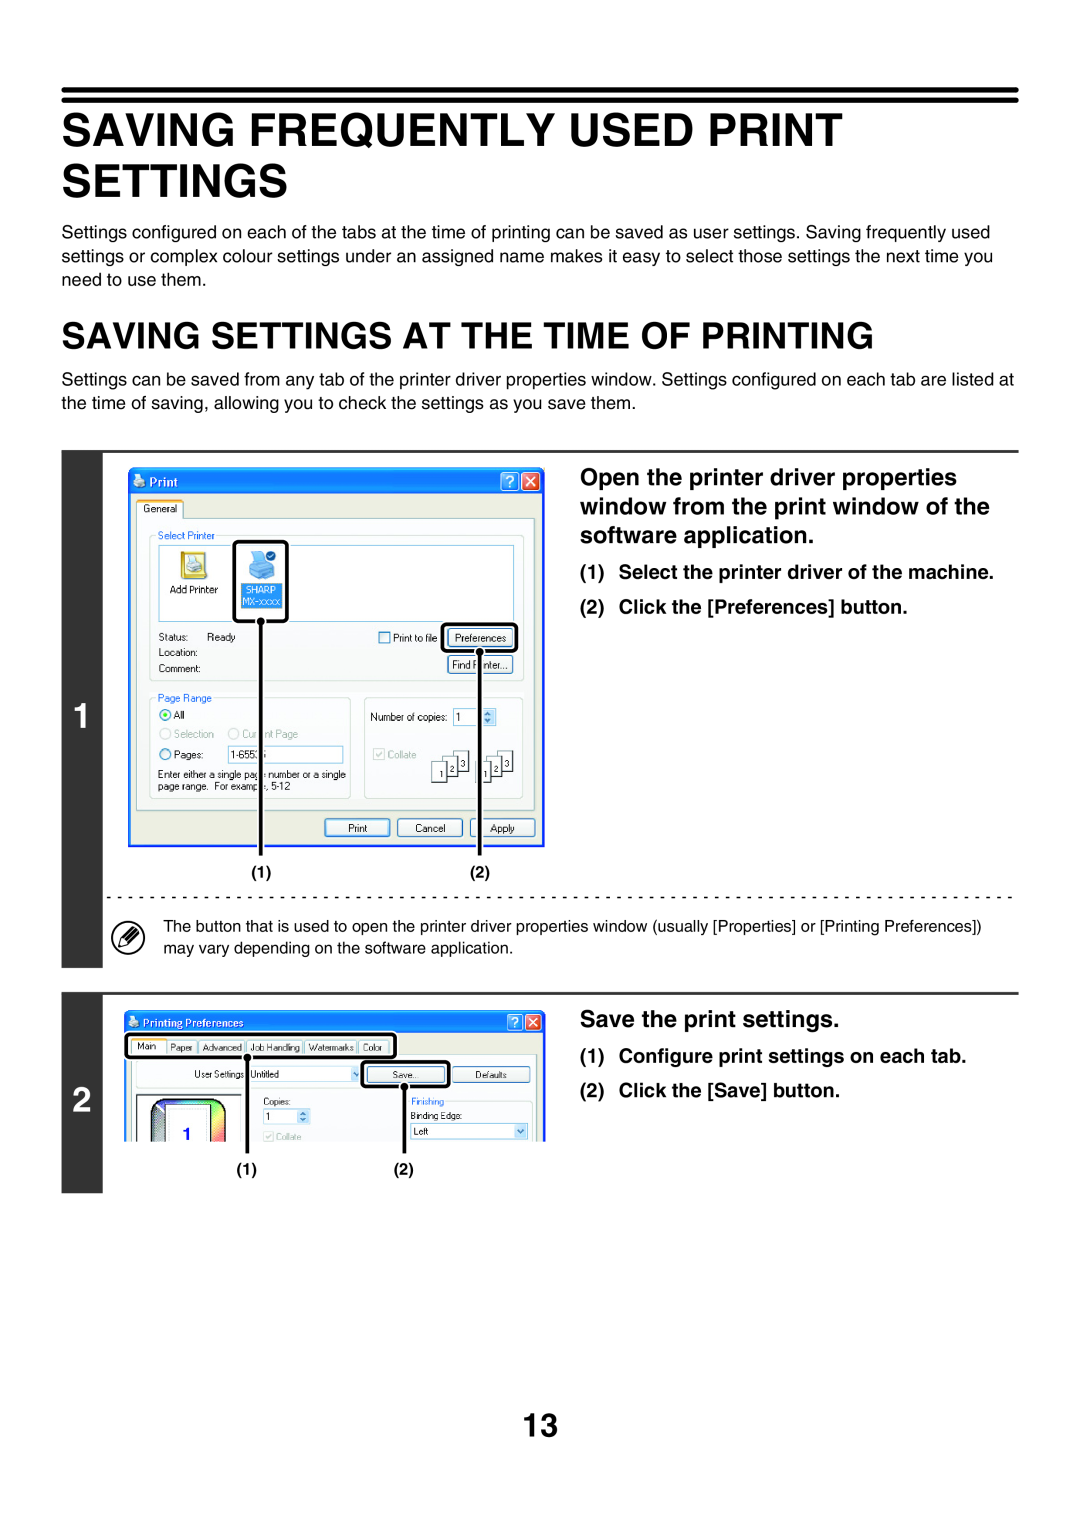 Sharp MX-7000N Saving Frequently Used Print Settings, Saving Settings At The Time Of Printing, Save the print settings 